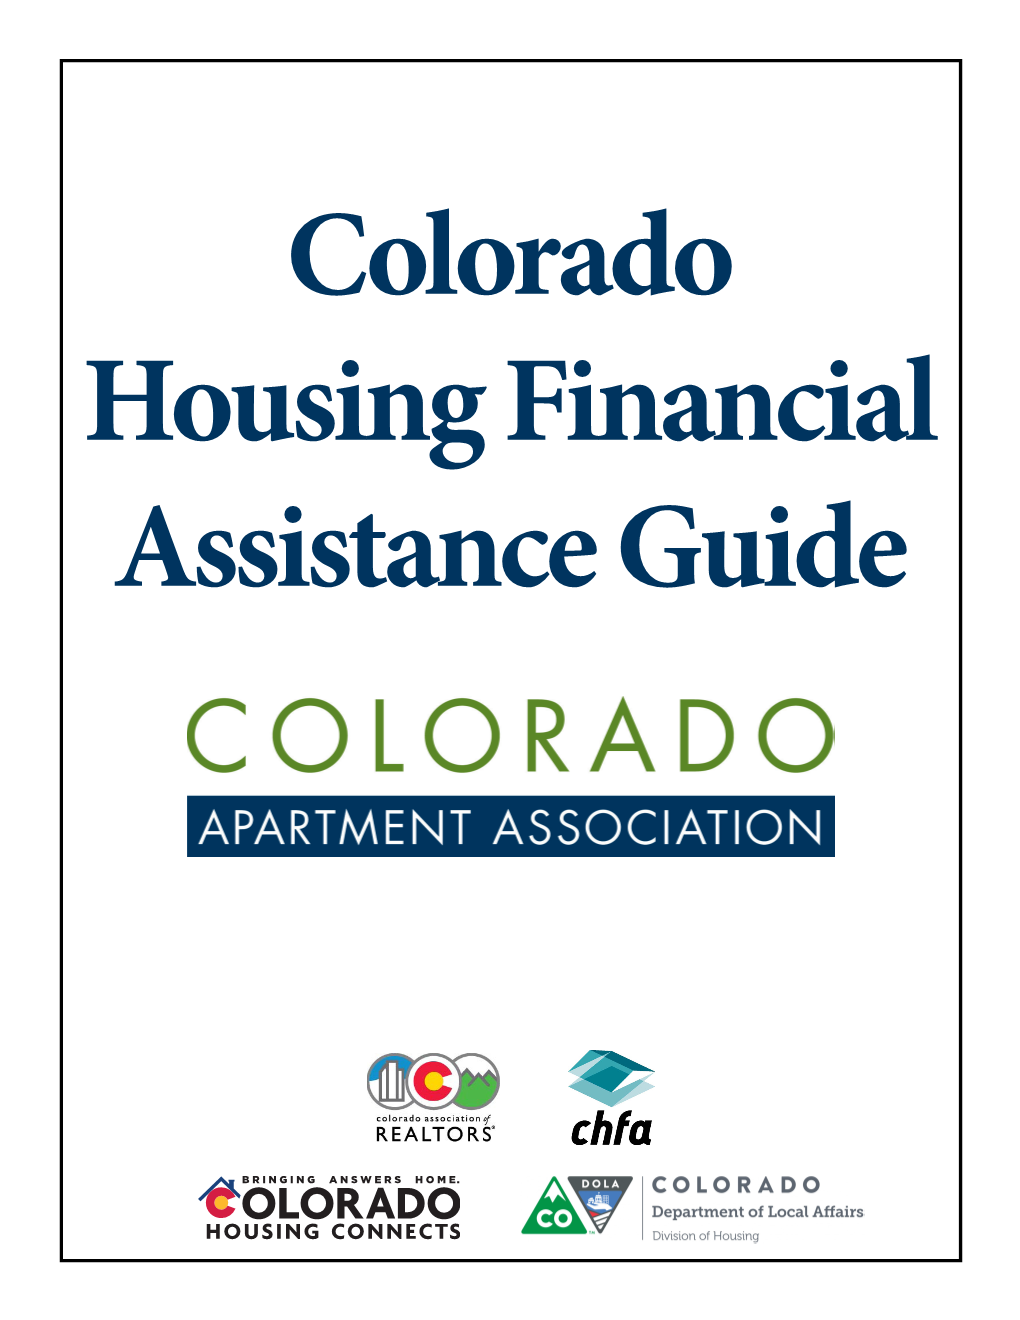 Colorado Housing Financial Assistance Guide